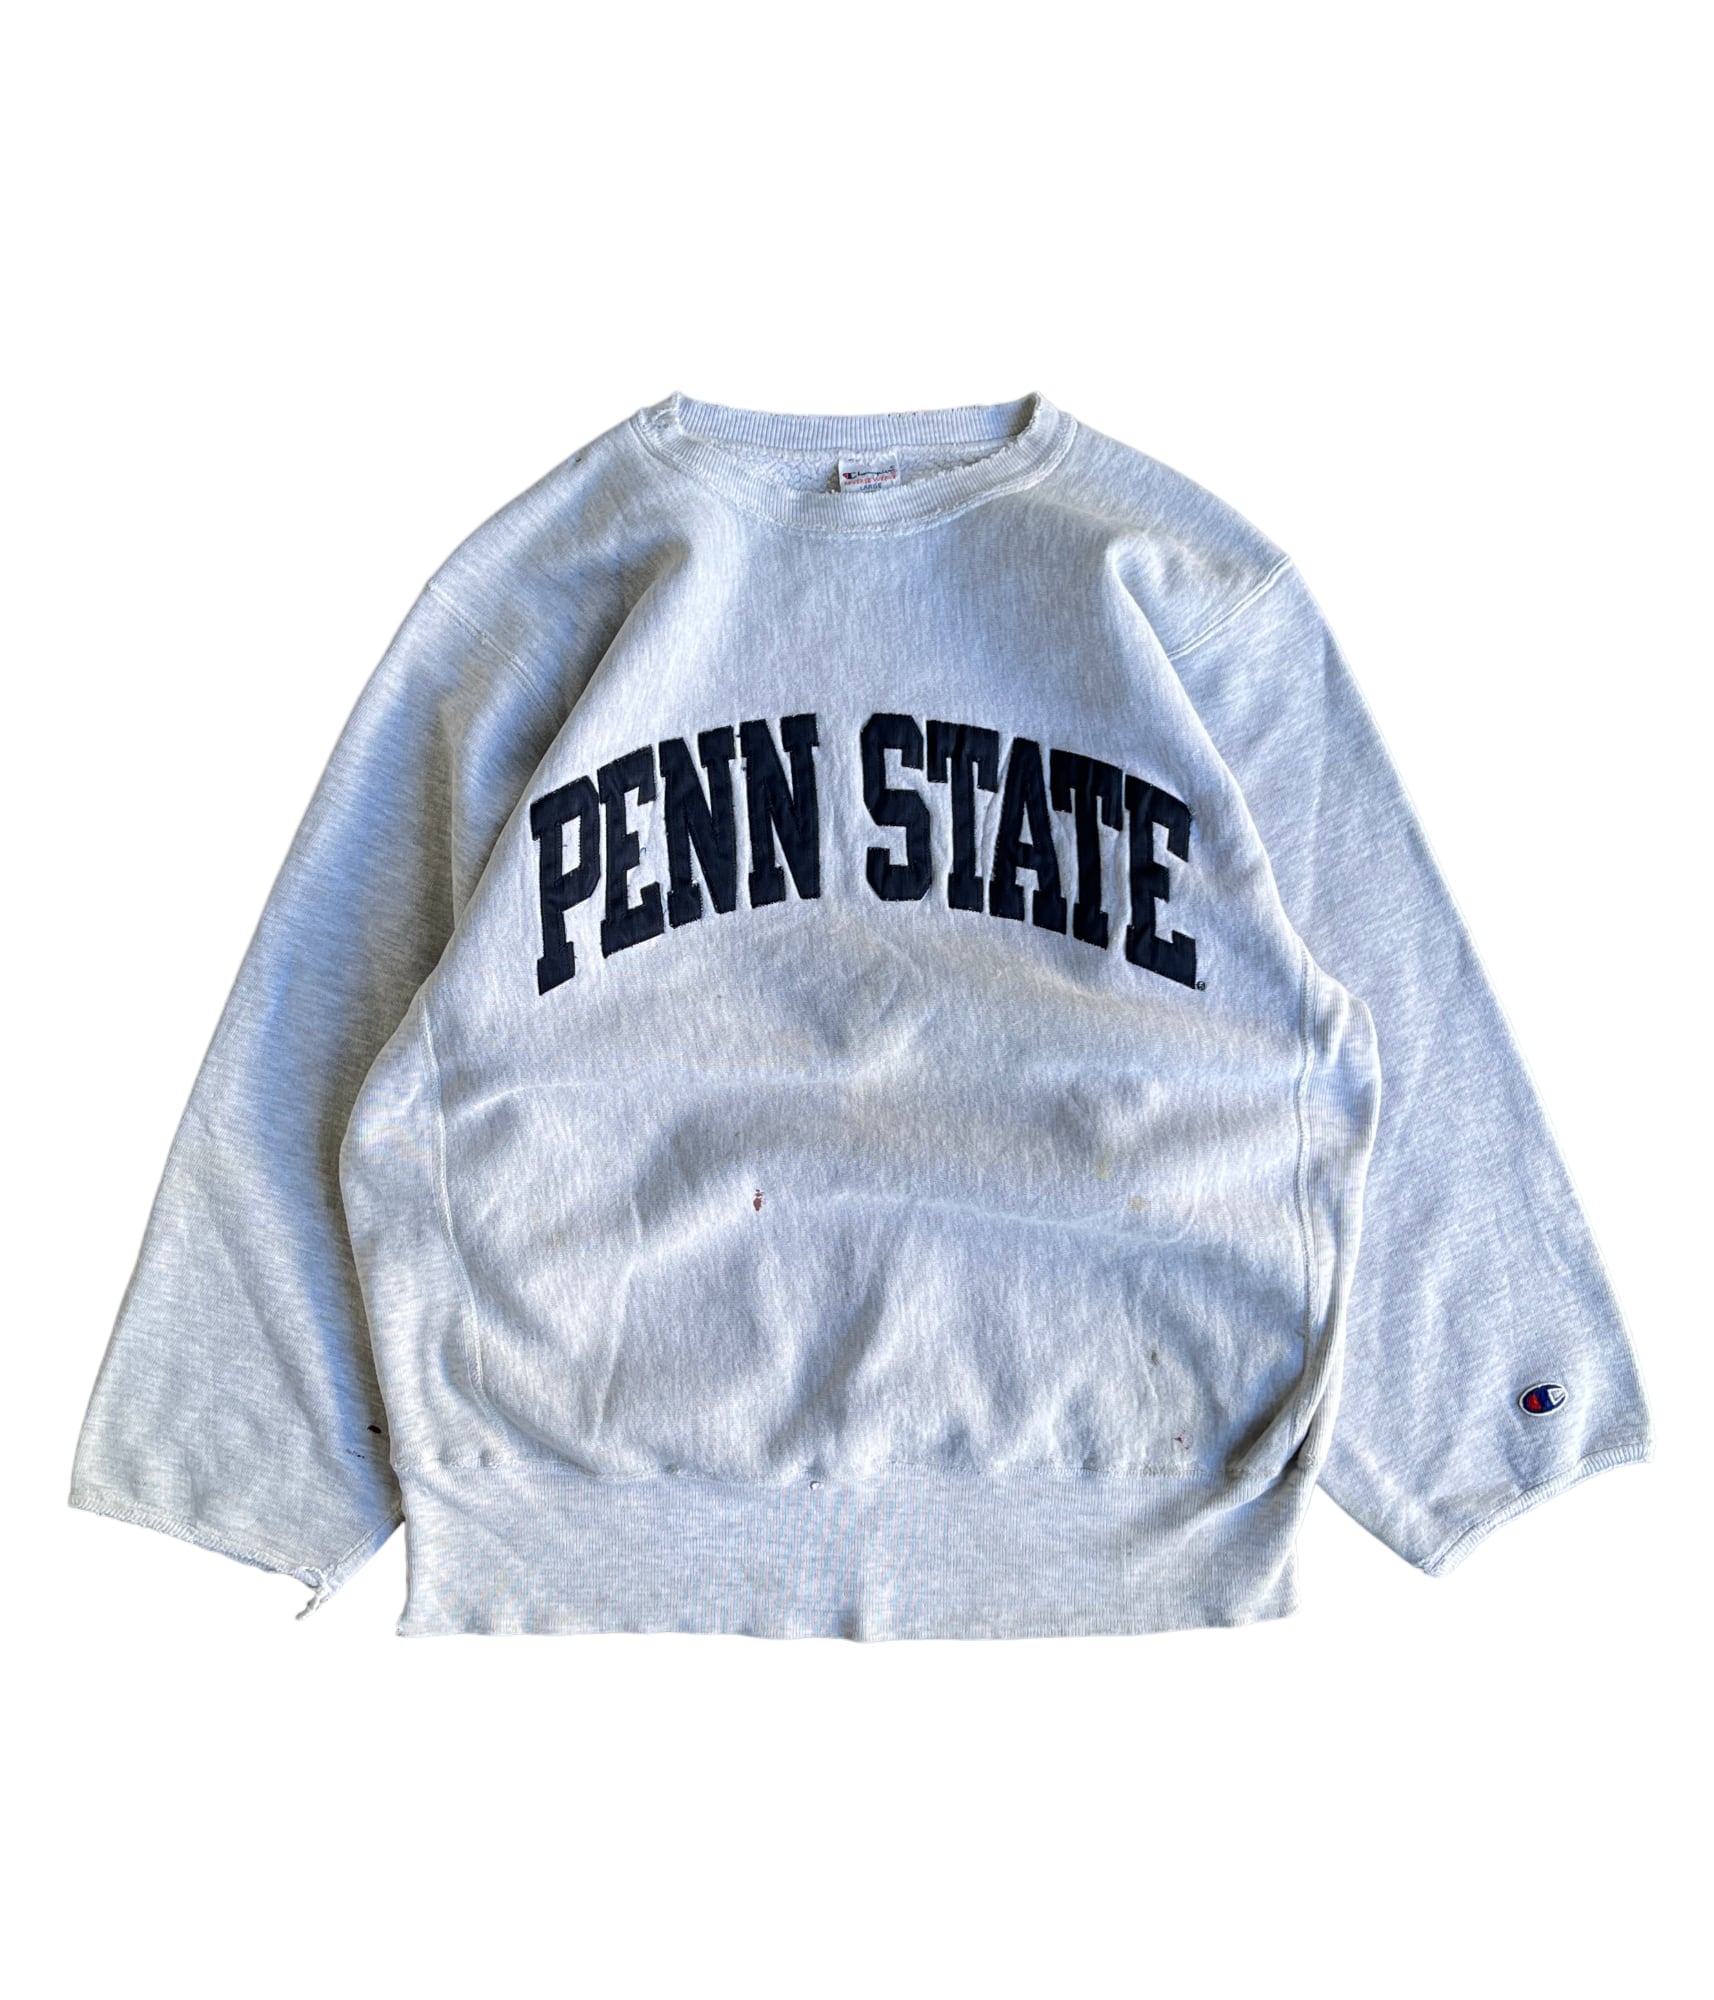 Vintage s L Champion reverse weave sweatshirt  PENN STATE